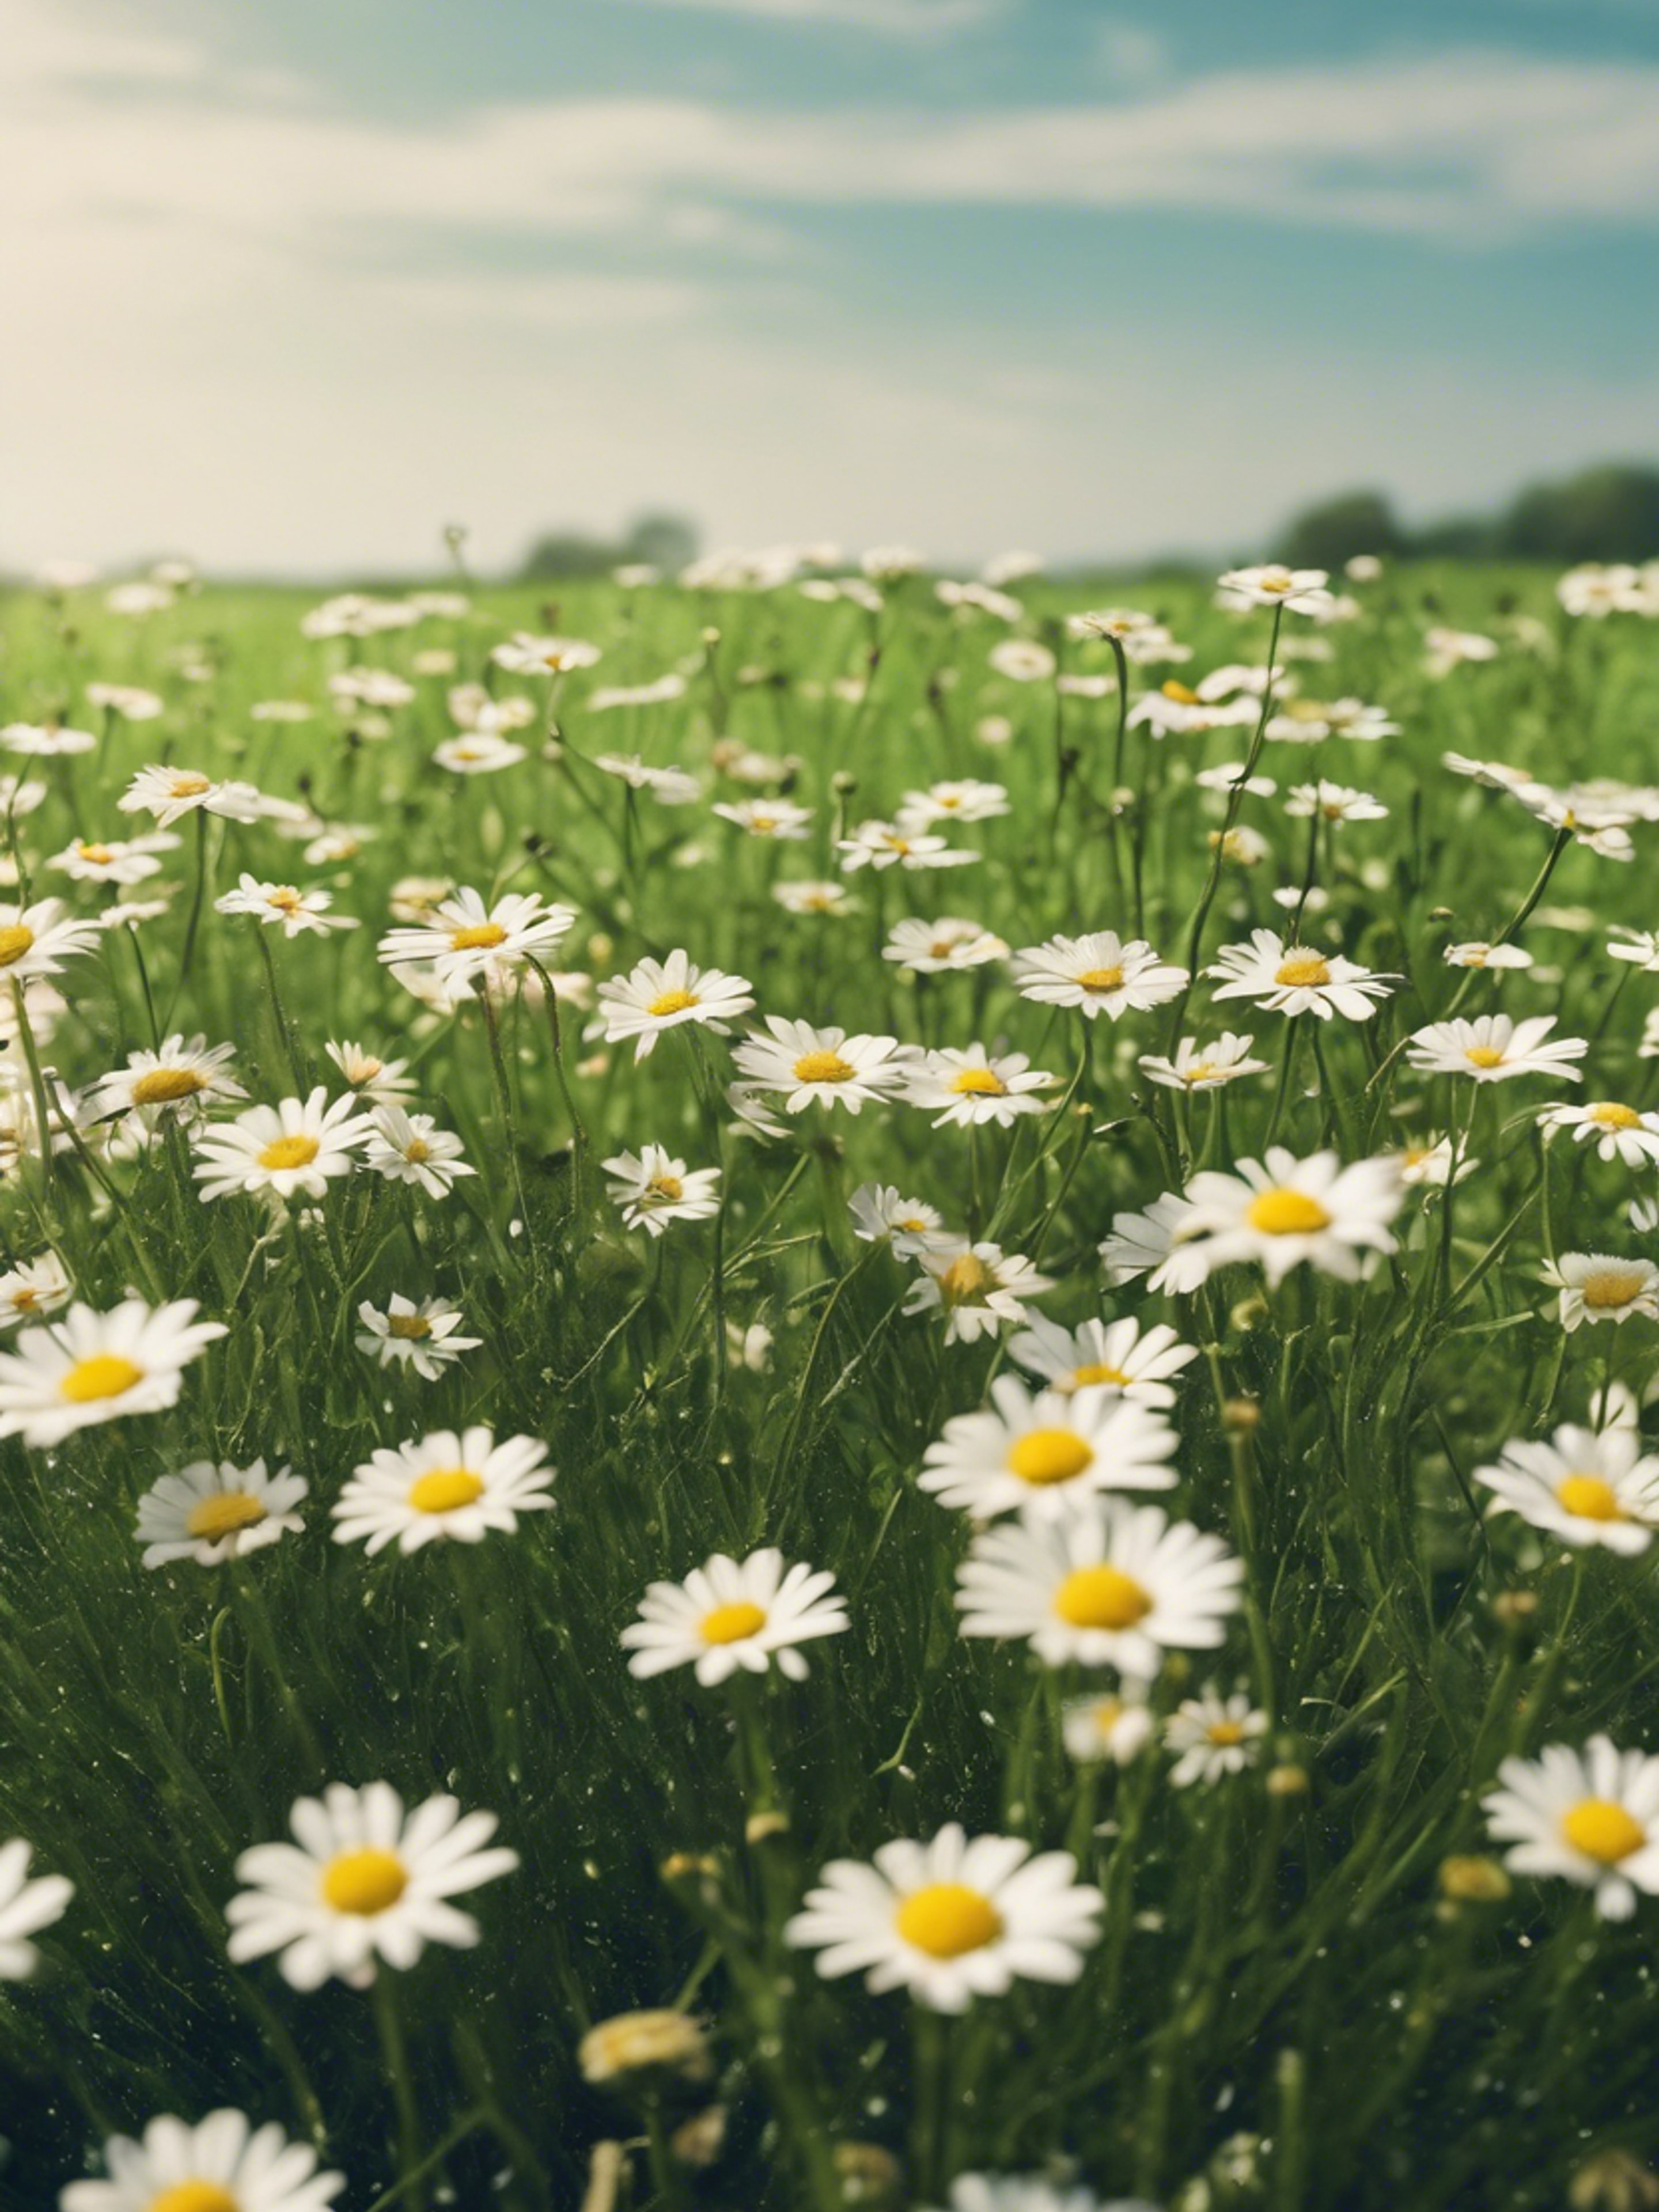 A cool green field sprinkled with daisies under a morning sky. Papel de parede[e270184600e04e908453]